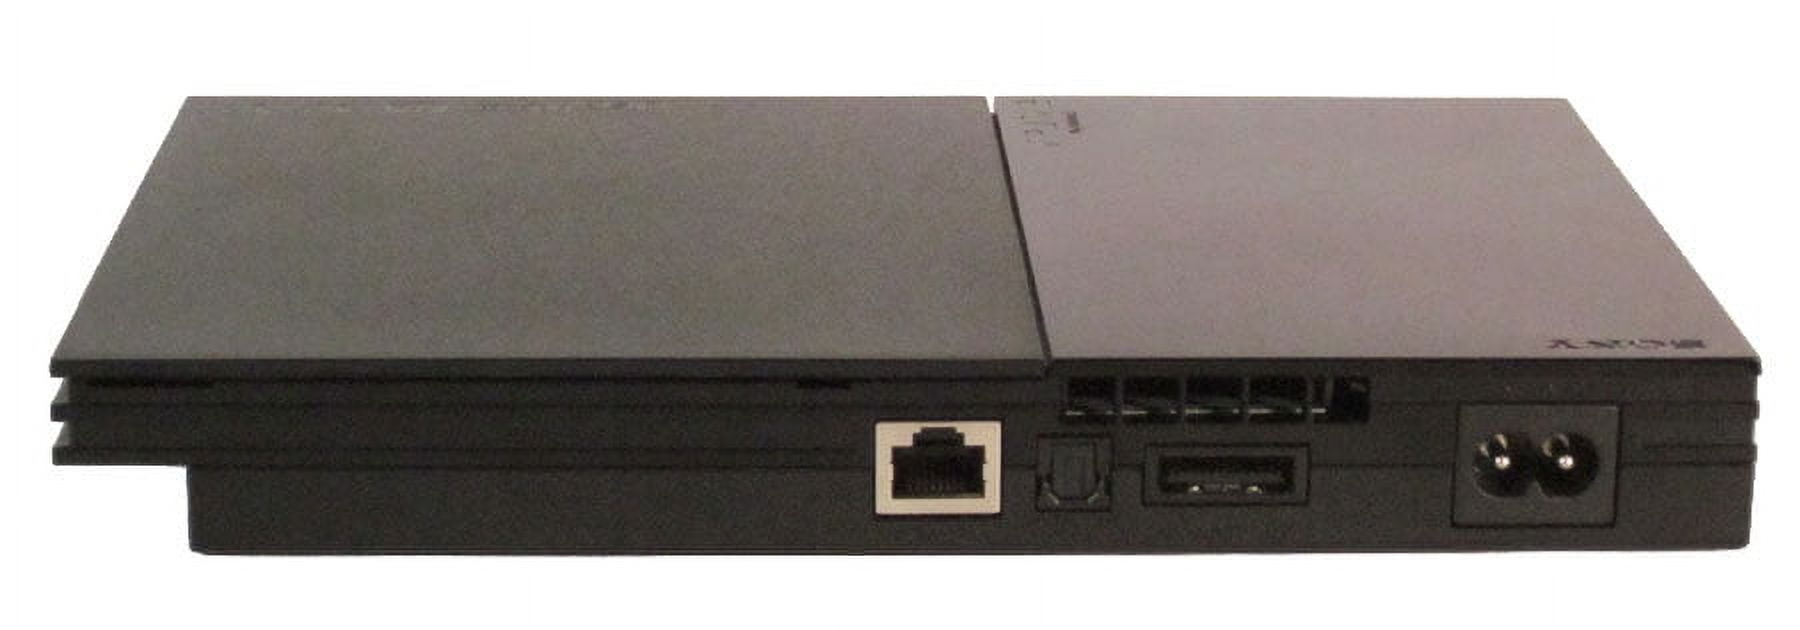 Consola PlayStation 2 Slim 77004 < RetroTiendas